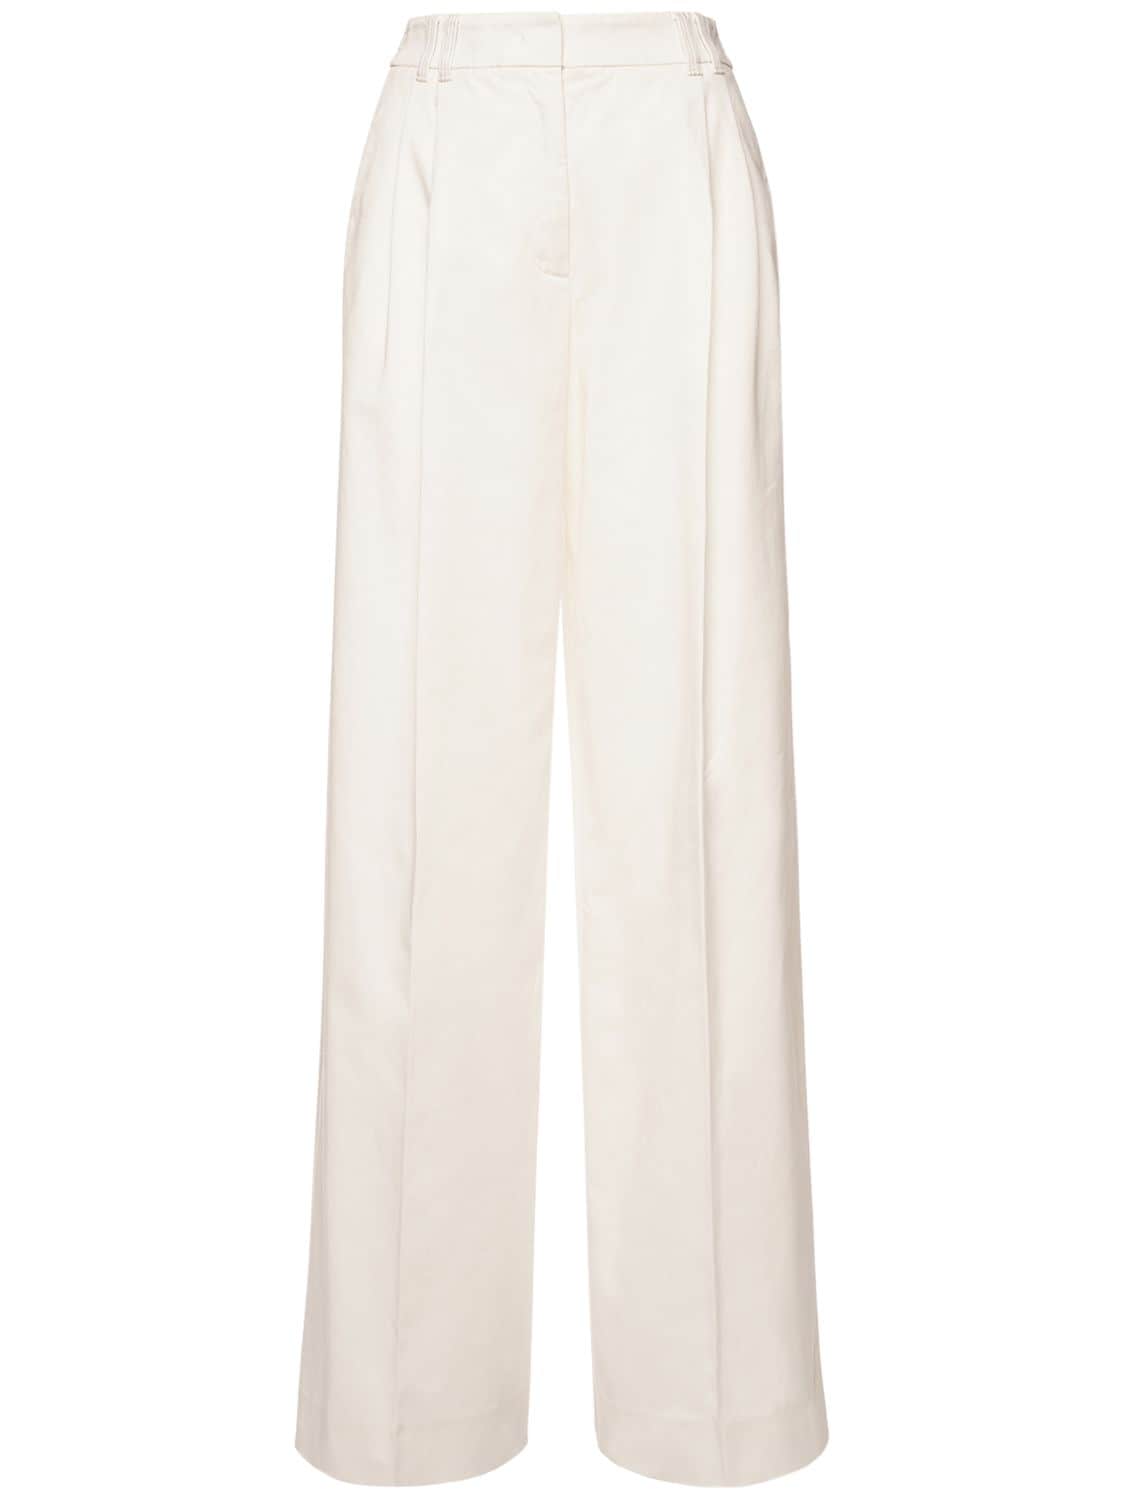 Agnona - High waist stretch cotton pants - Ivory | Luisaviaroma